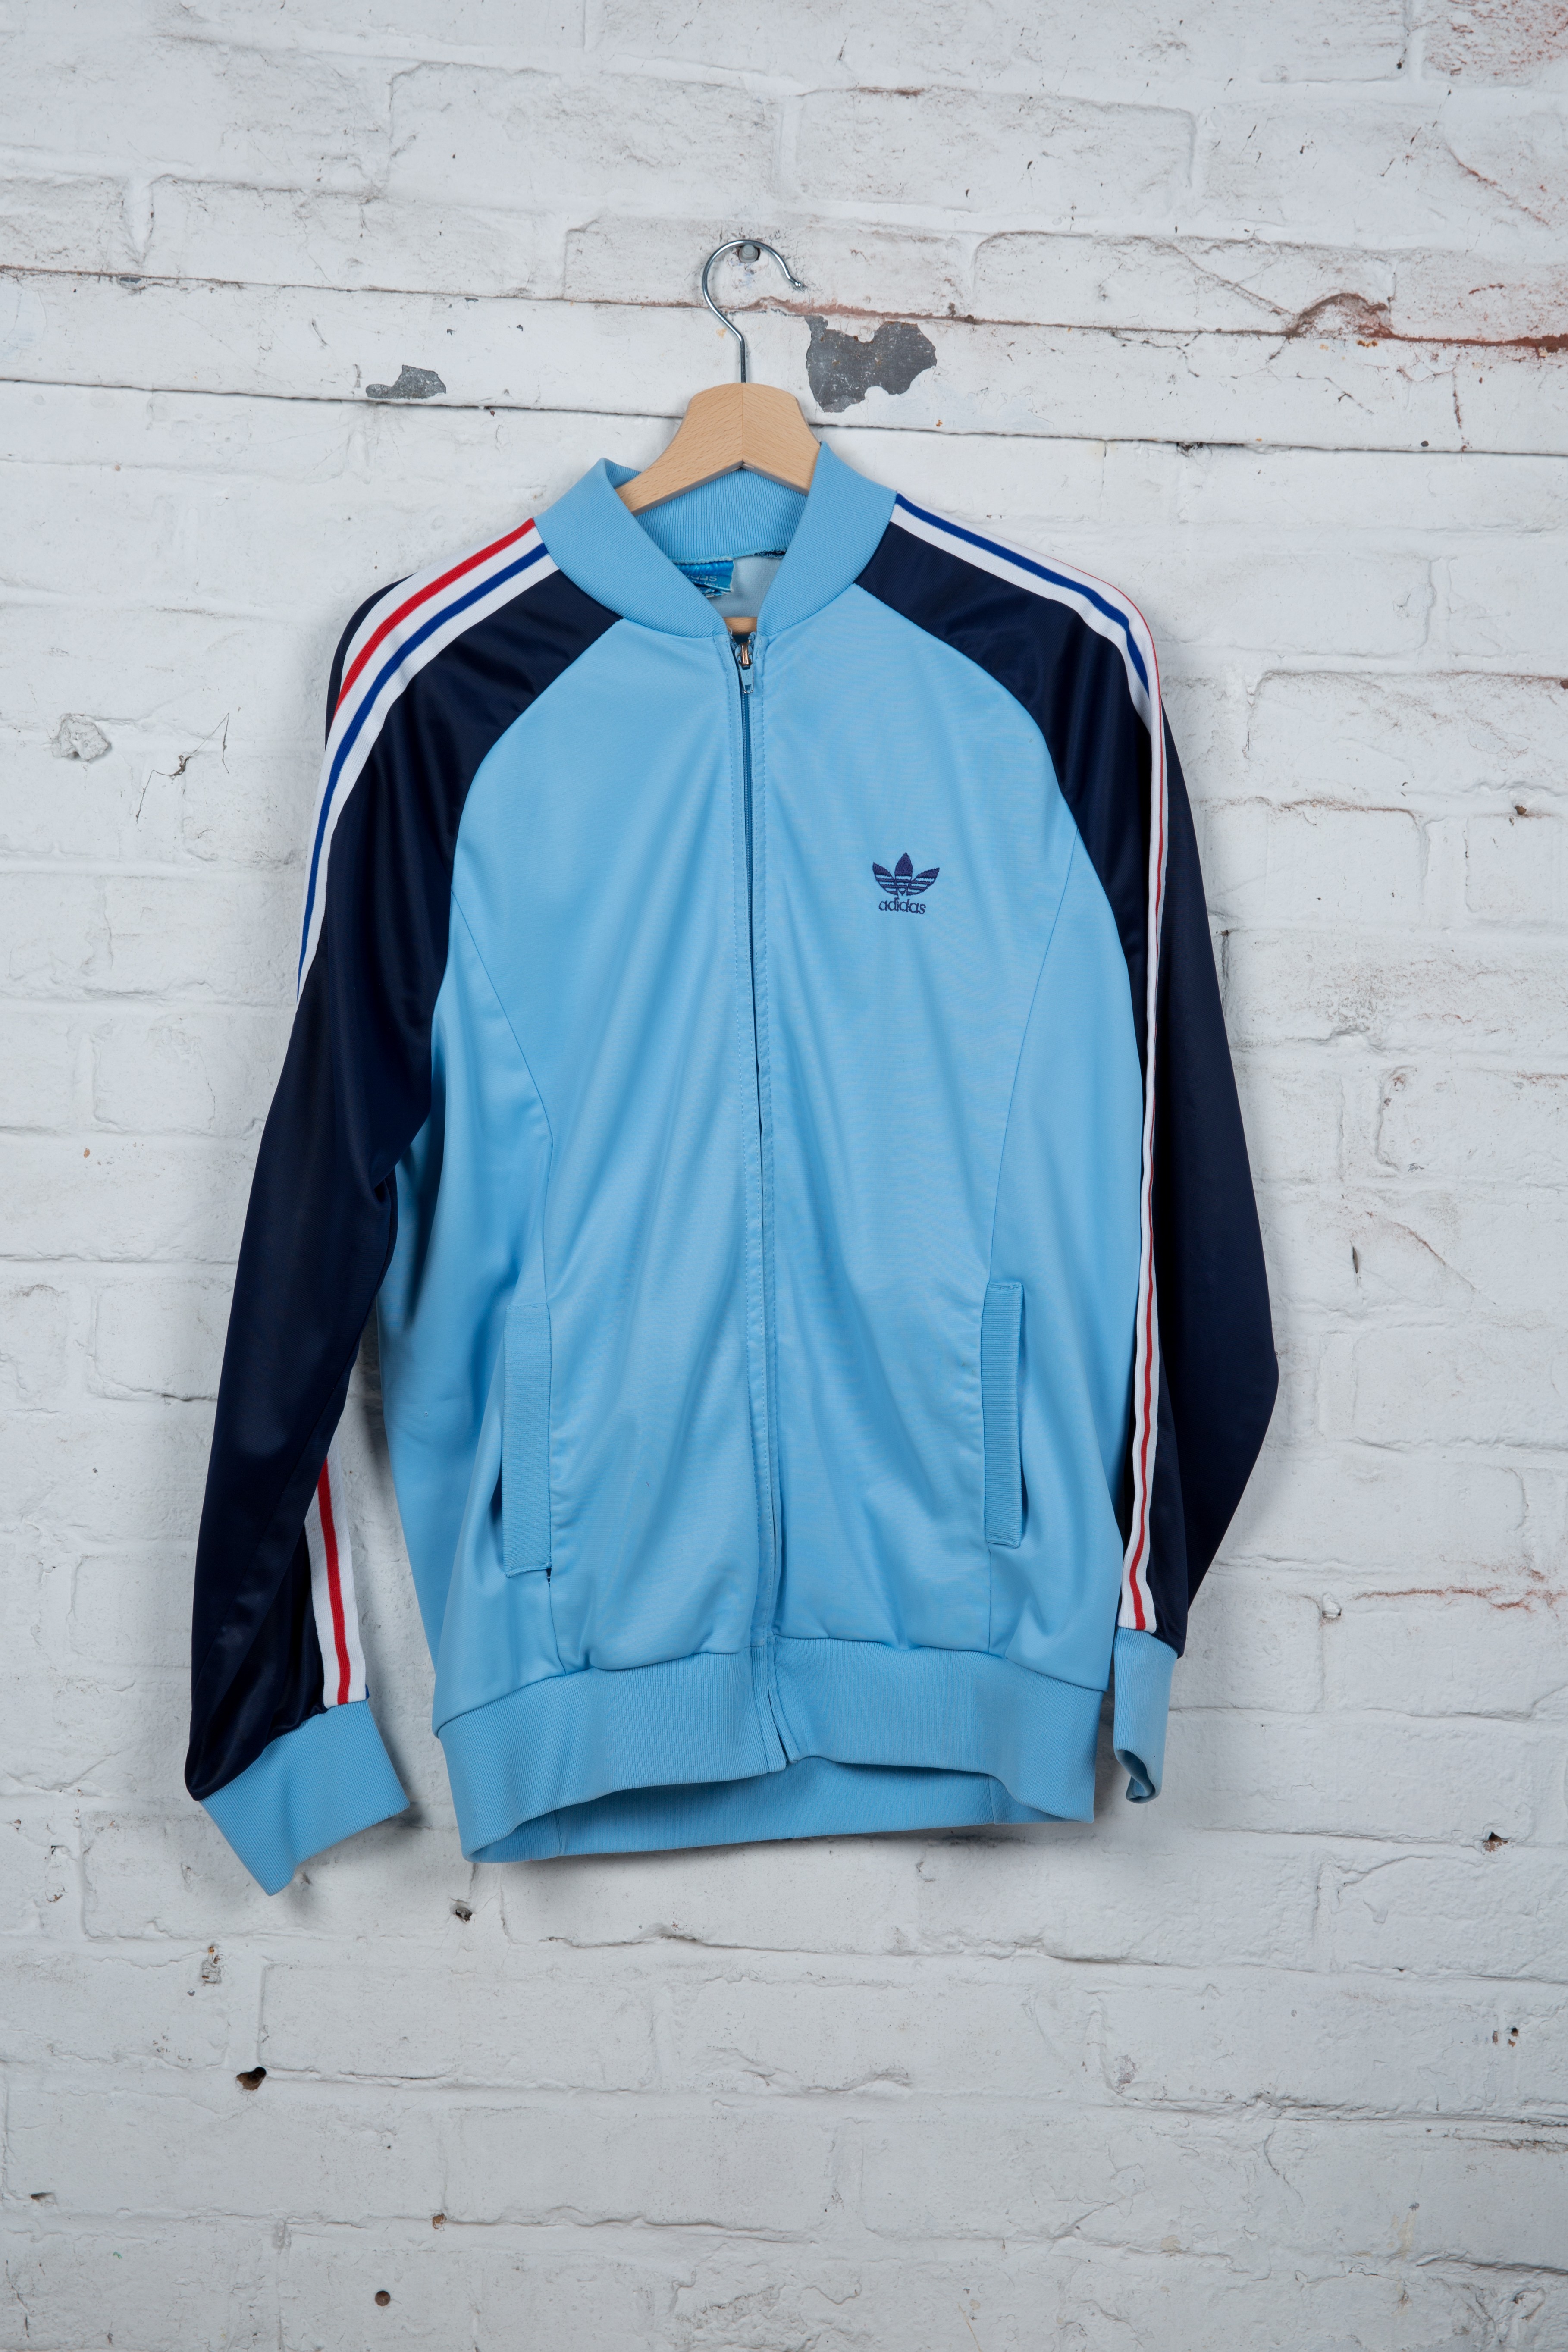 Veste de Jogging - Adidas - Vintage - Bleu - Bleu Marine - Equipe 